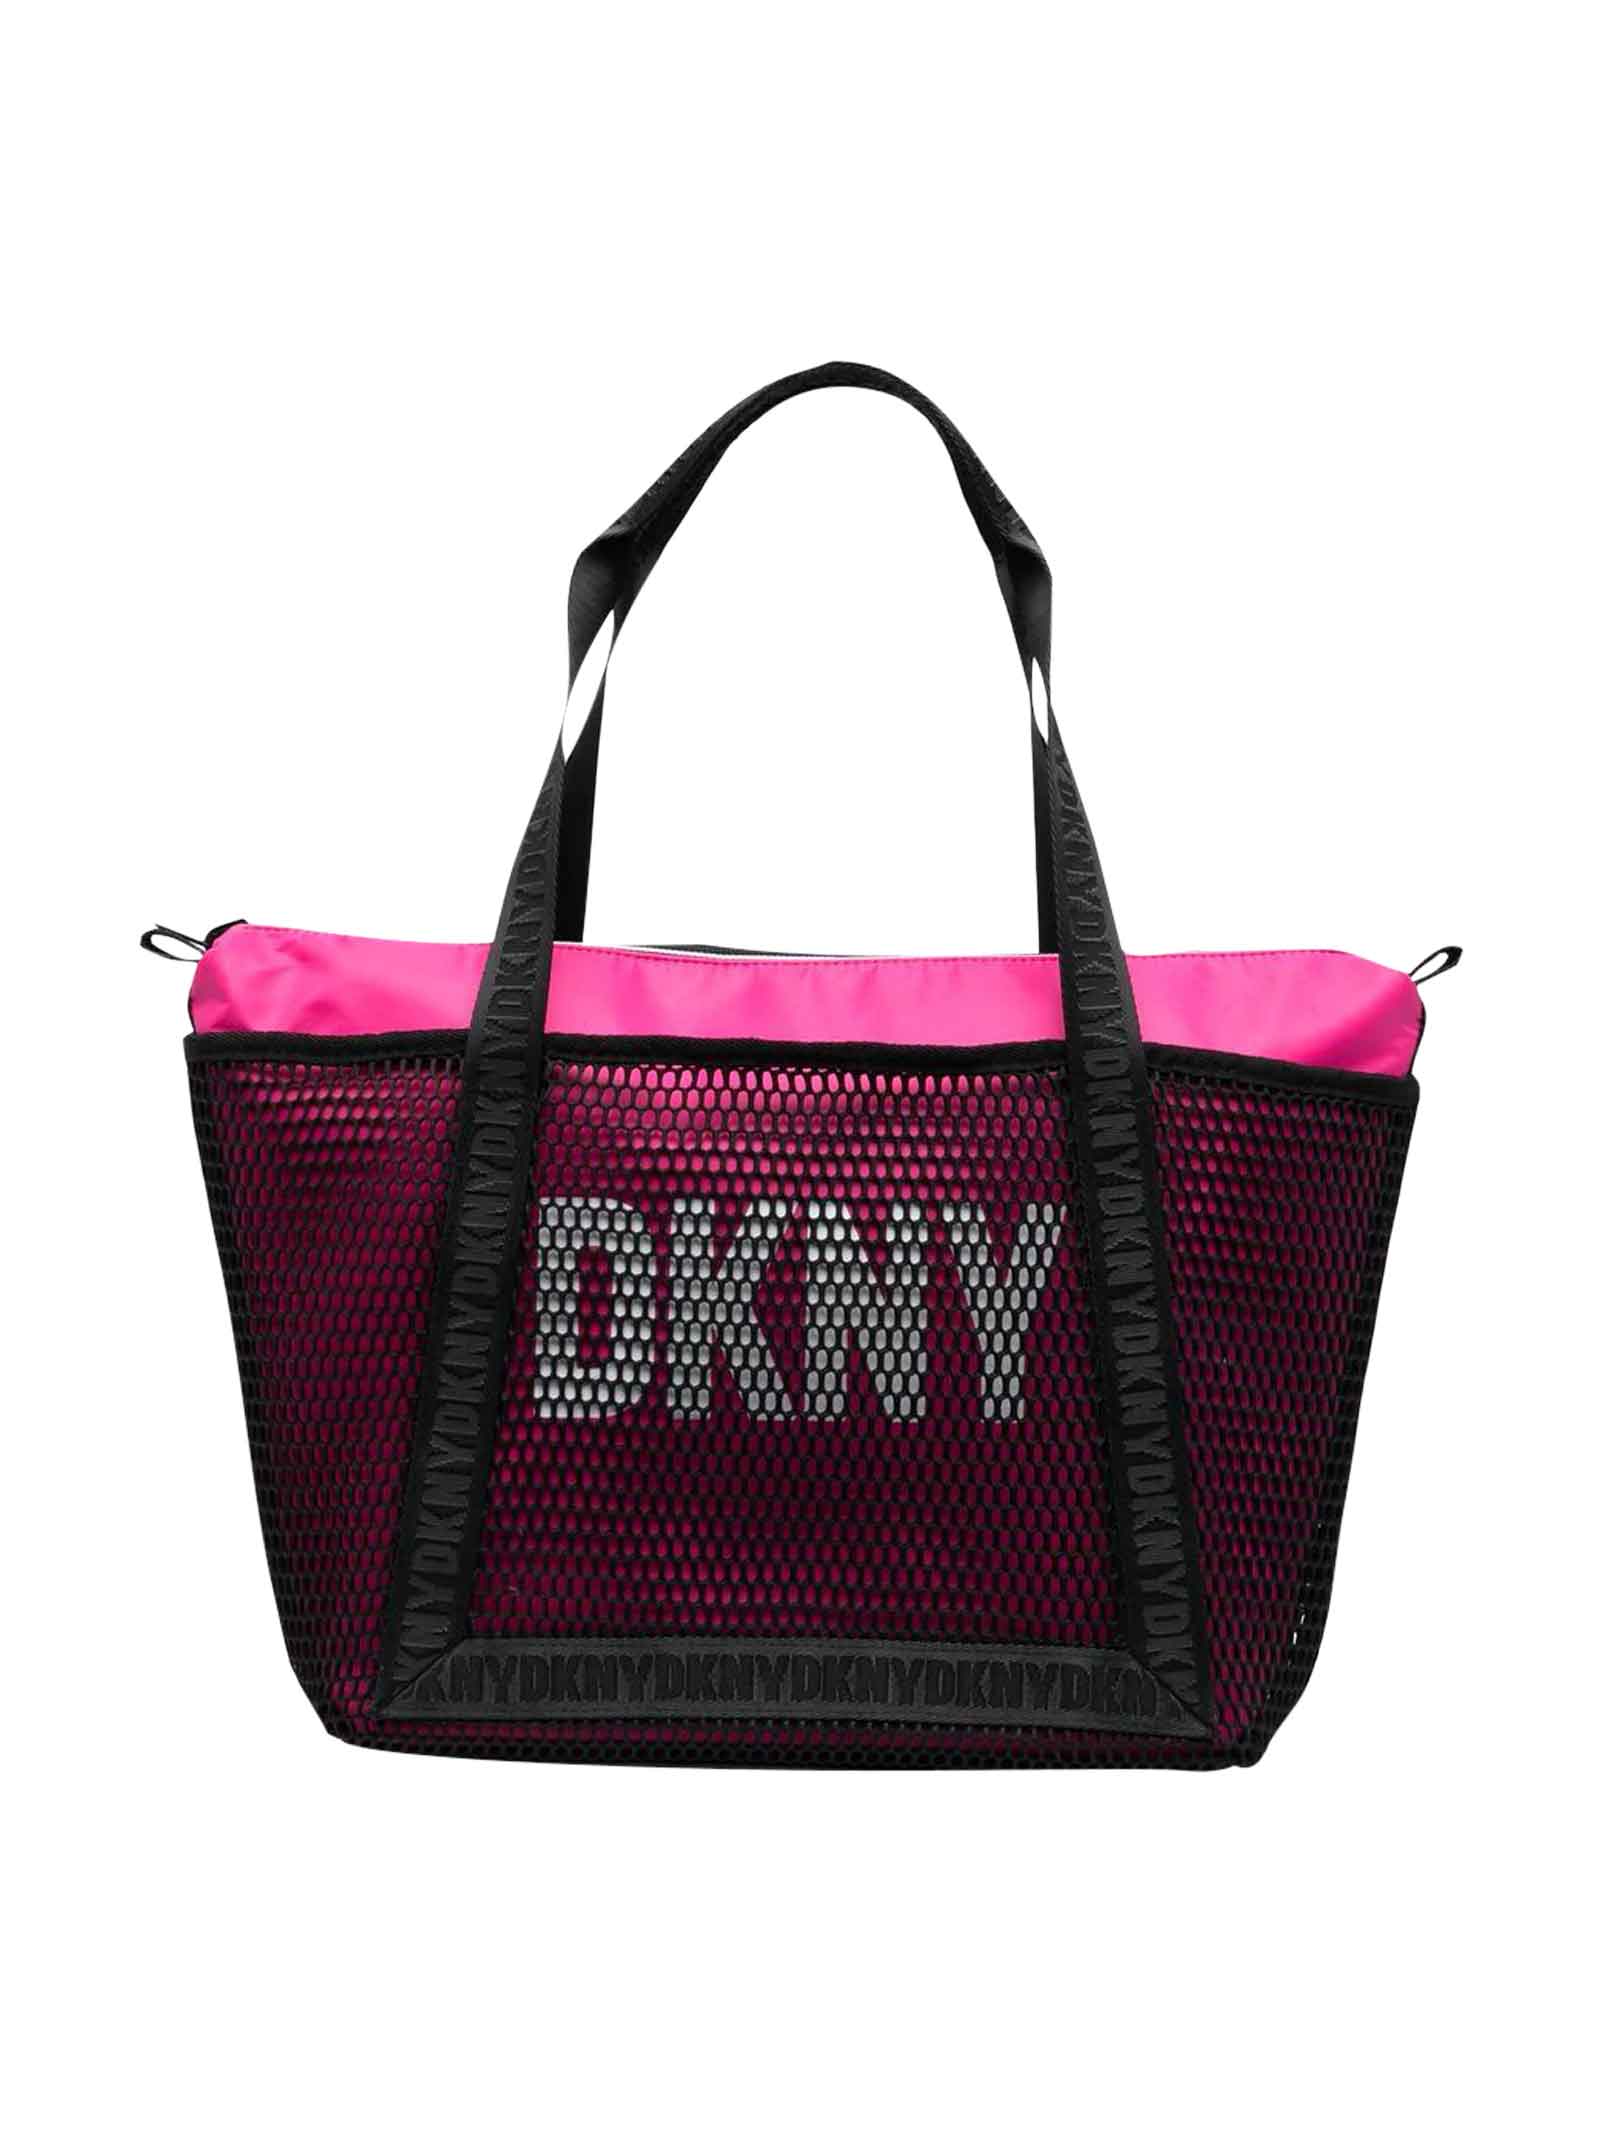 DKNY Black Bag Girl.